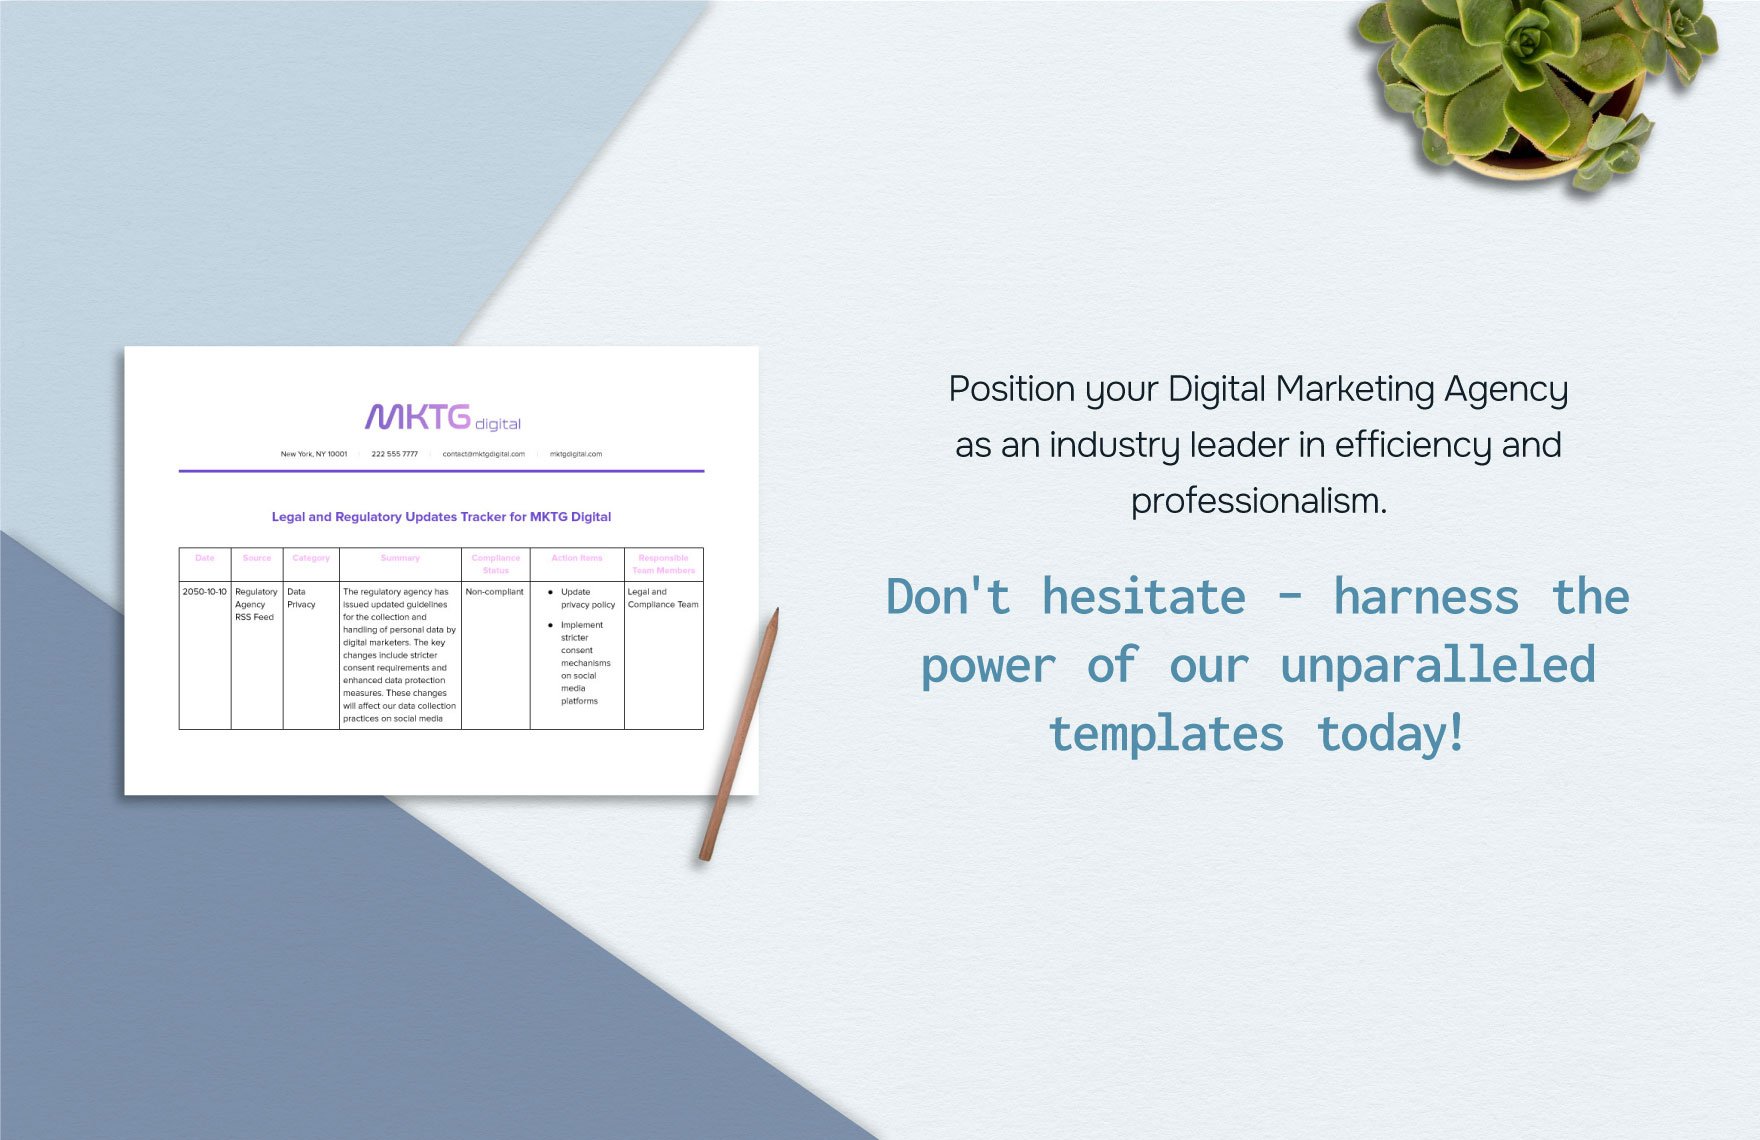 Digital Marketing Agency Legal and Regulatory Updates Tracker Template